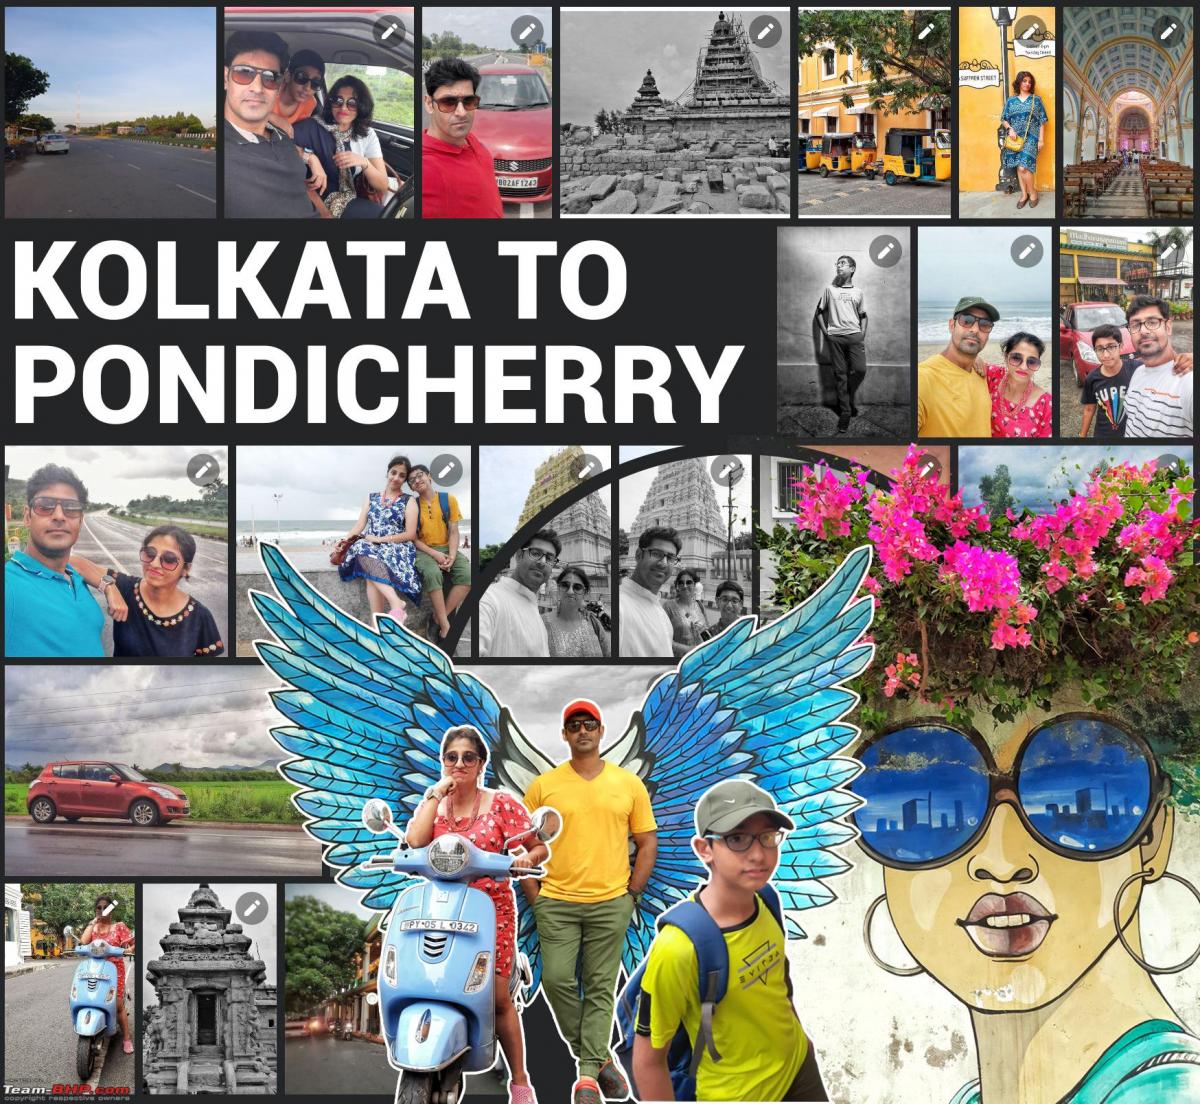 4700 km, 11 days & 1 Maruti Swift: Kolkata - Rameshwaram road trip, Indian, Member Content, Travelogue, Maruti Swift